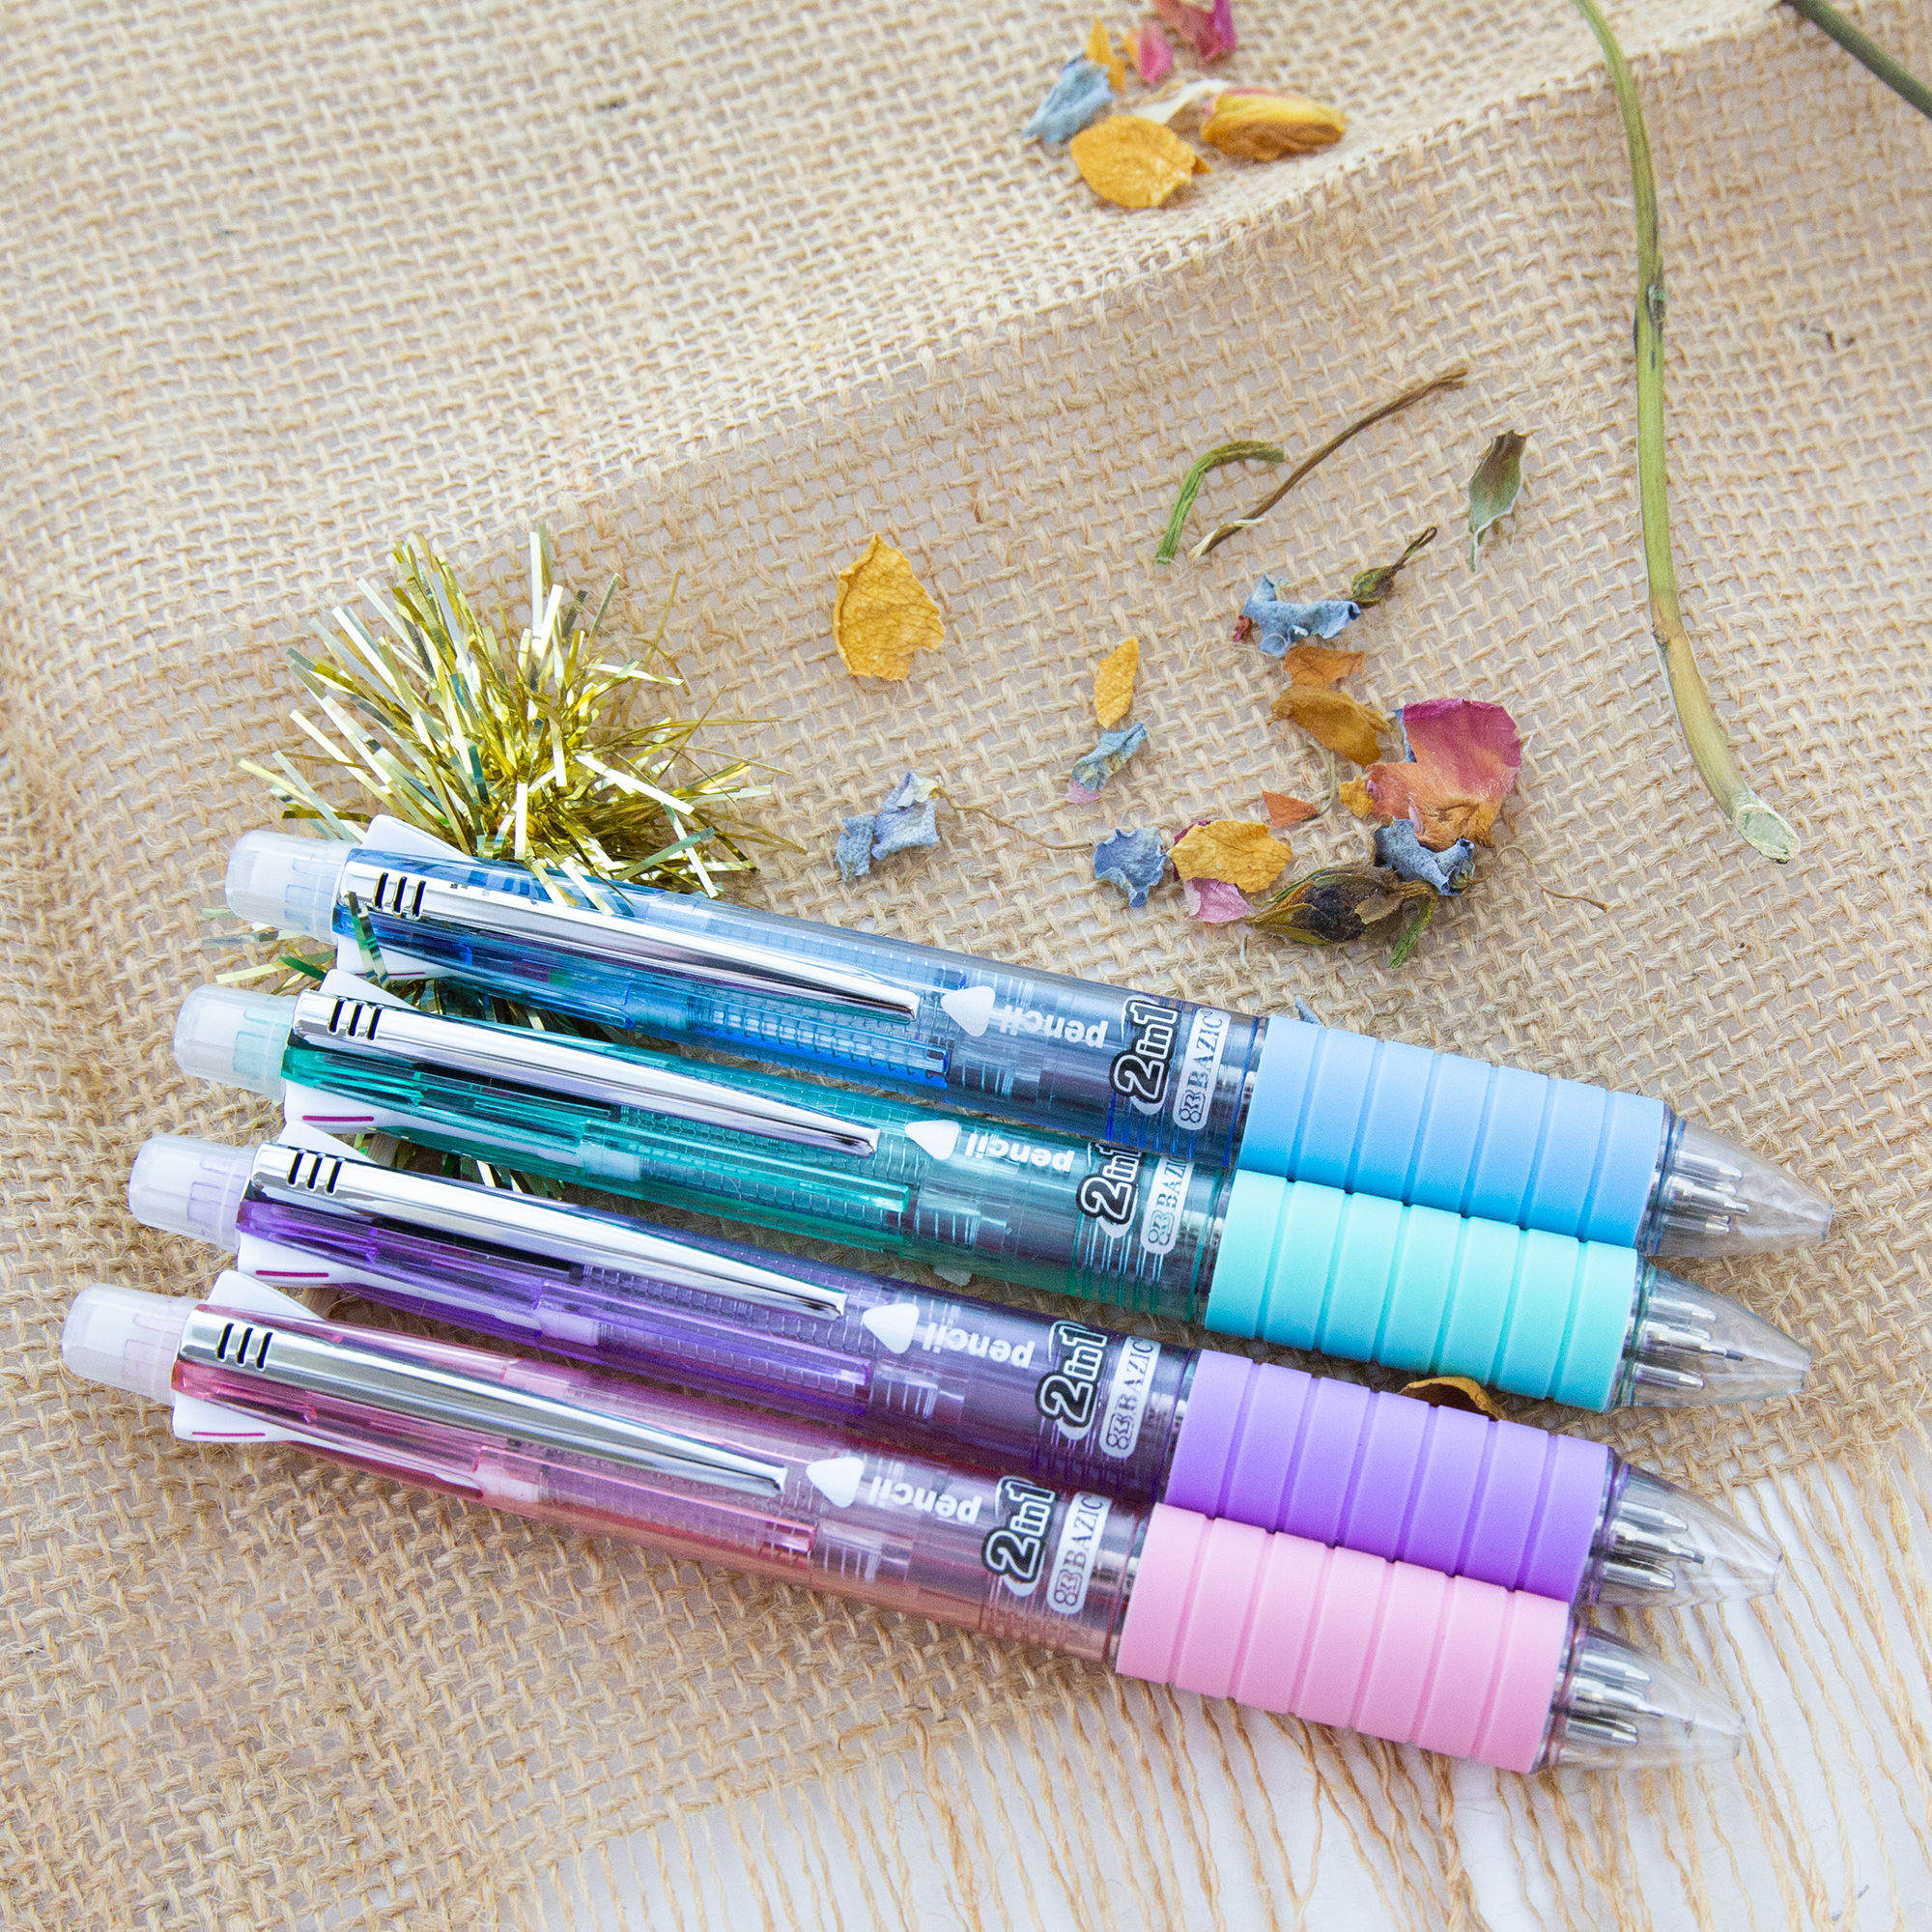 Bazic White-Out Correction Pens 9 mL/Pen 2 Pens/Pack - Yahoo Shopping